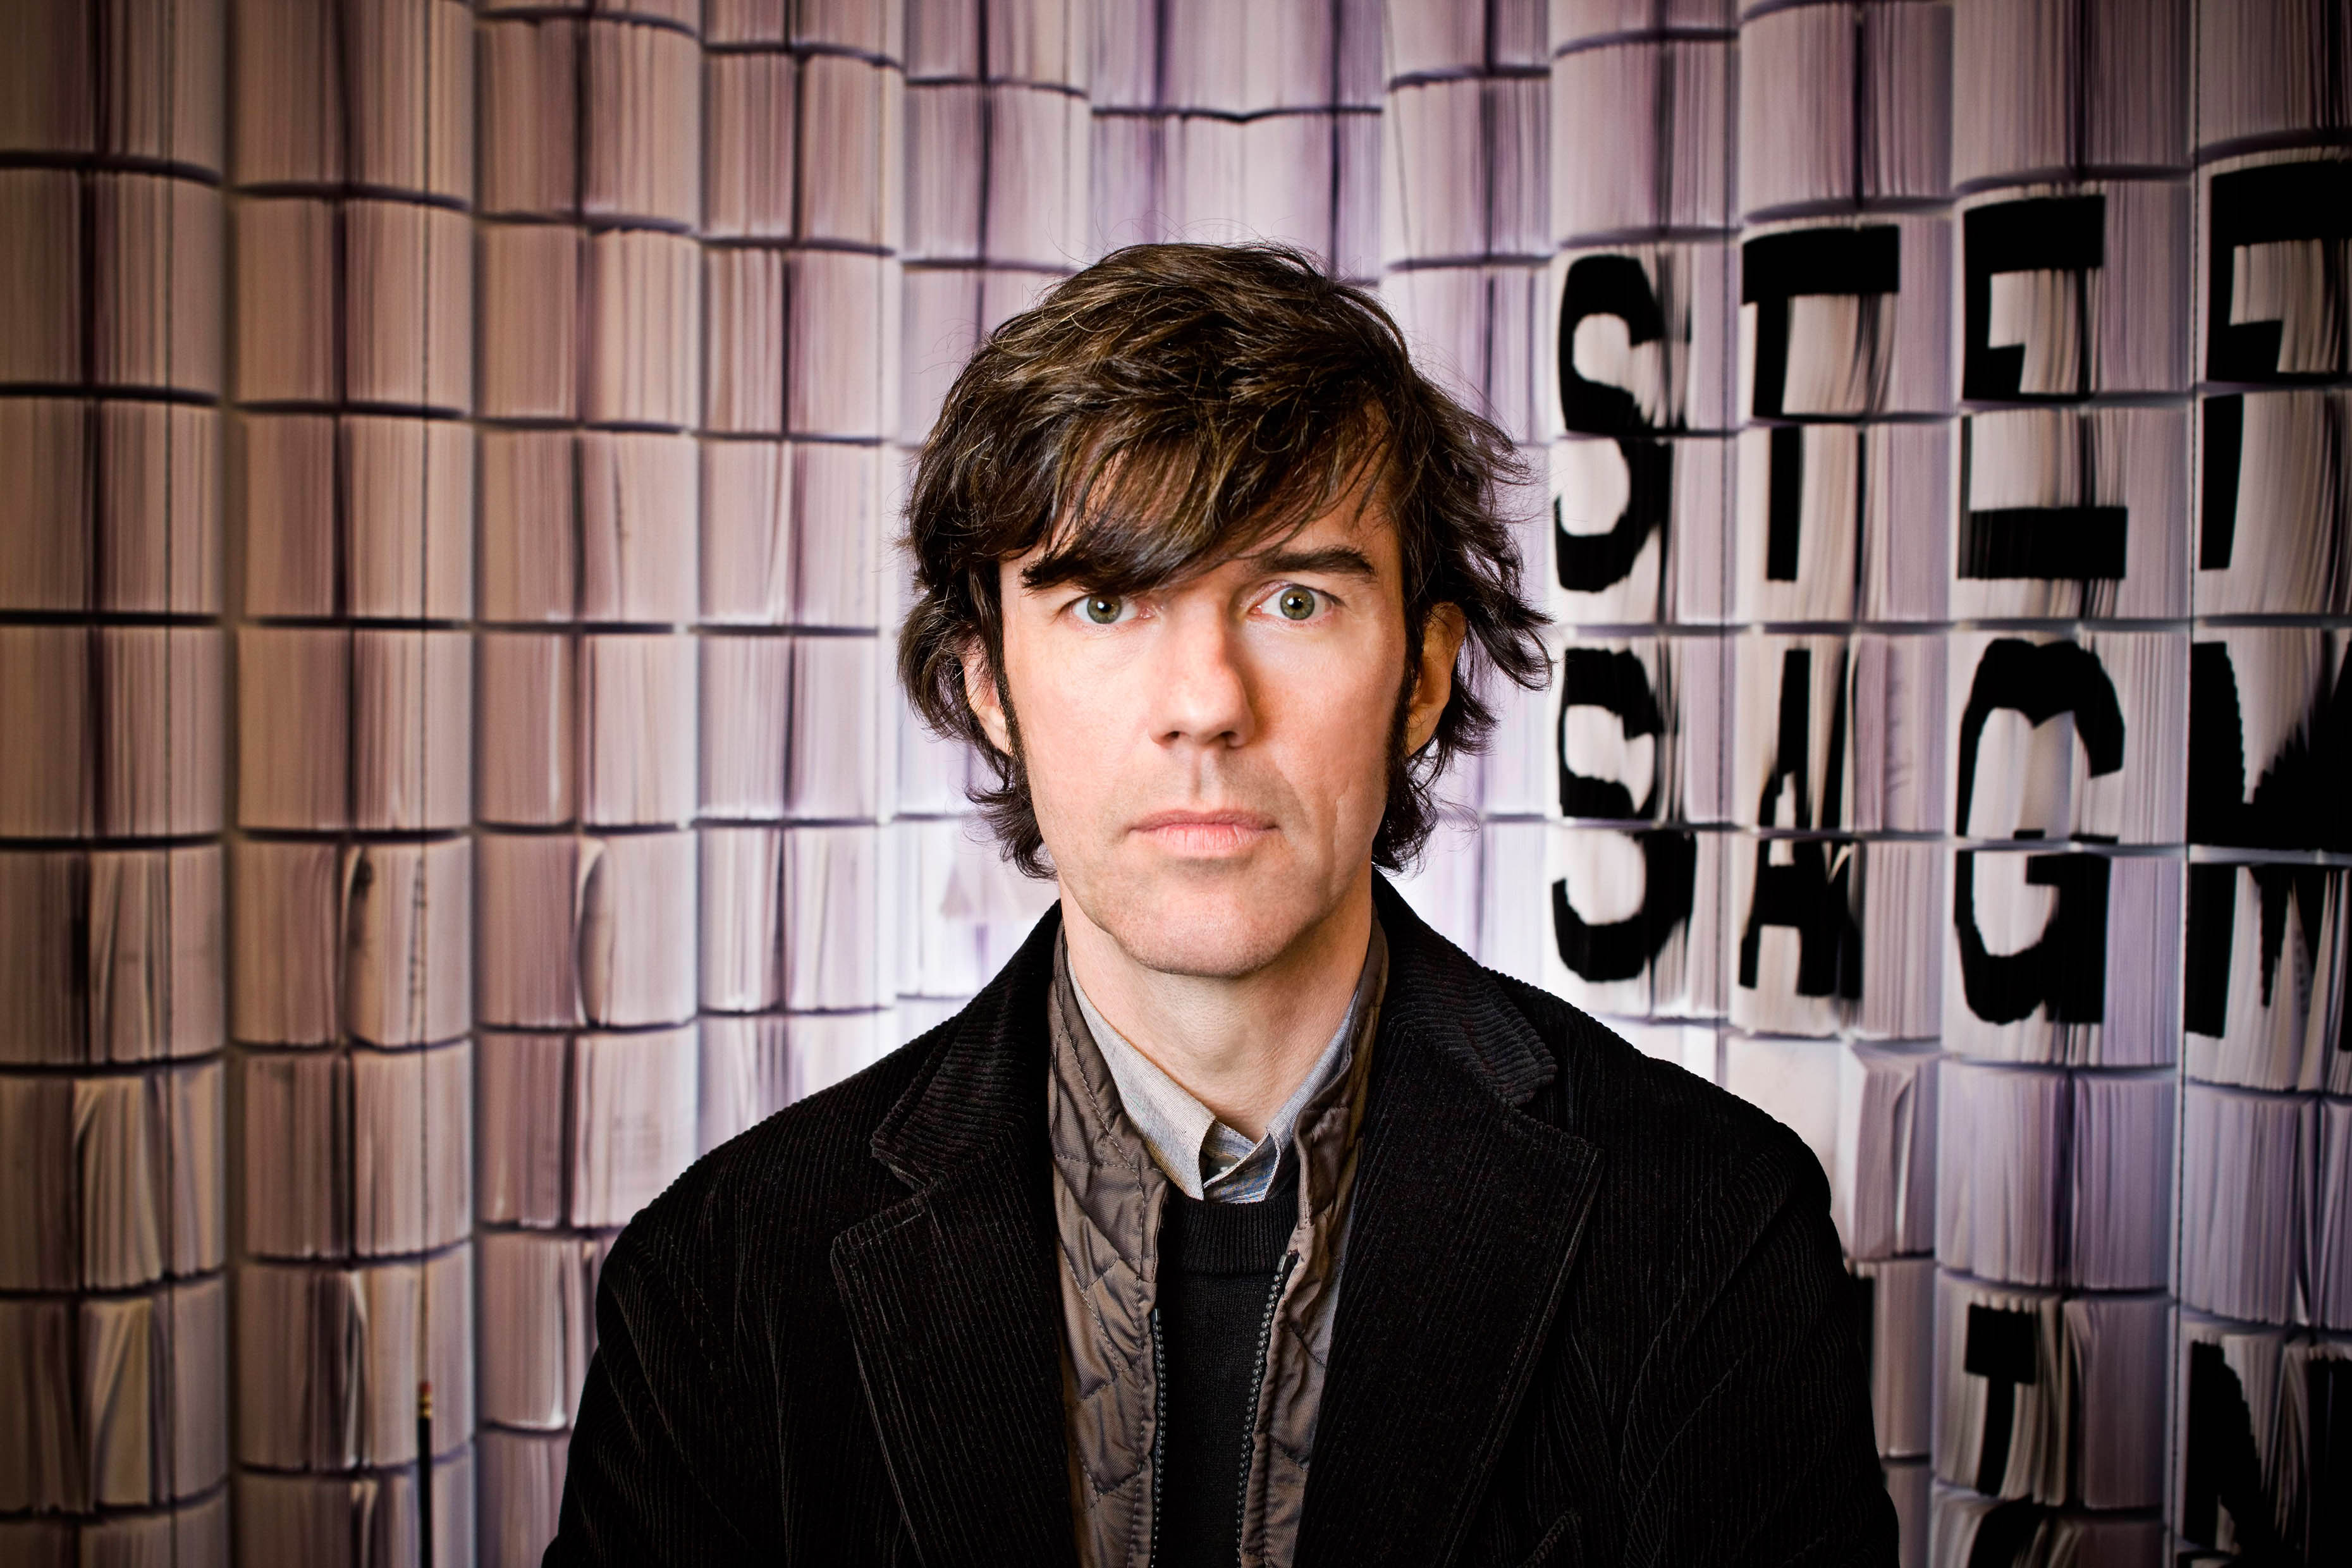 Stefan Sagmeister Foto: Sagmeister & Walsh